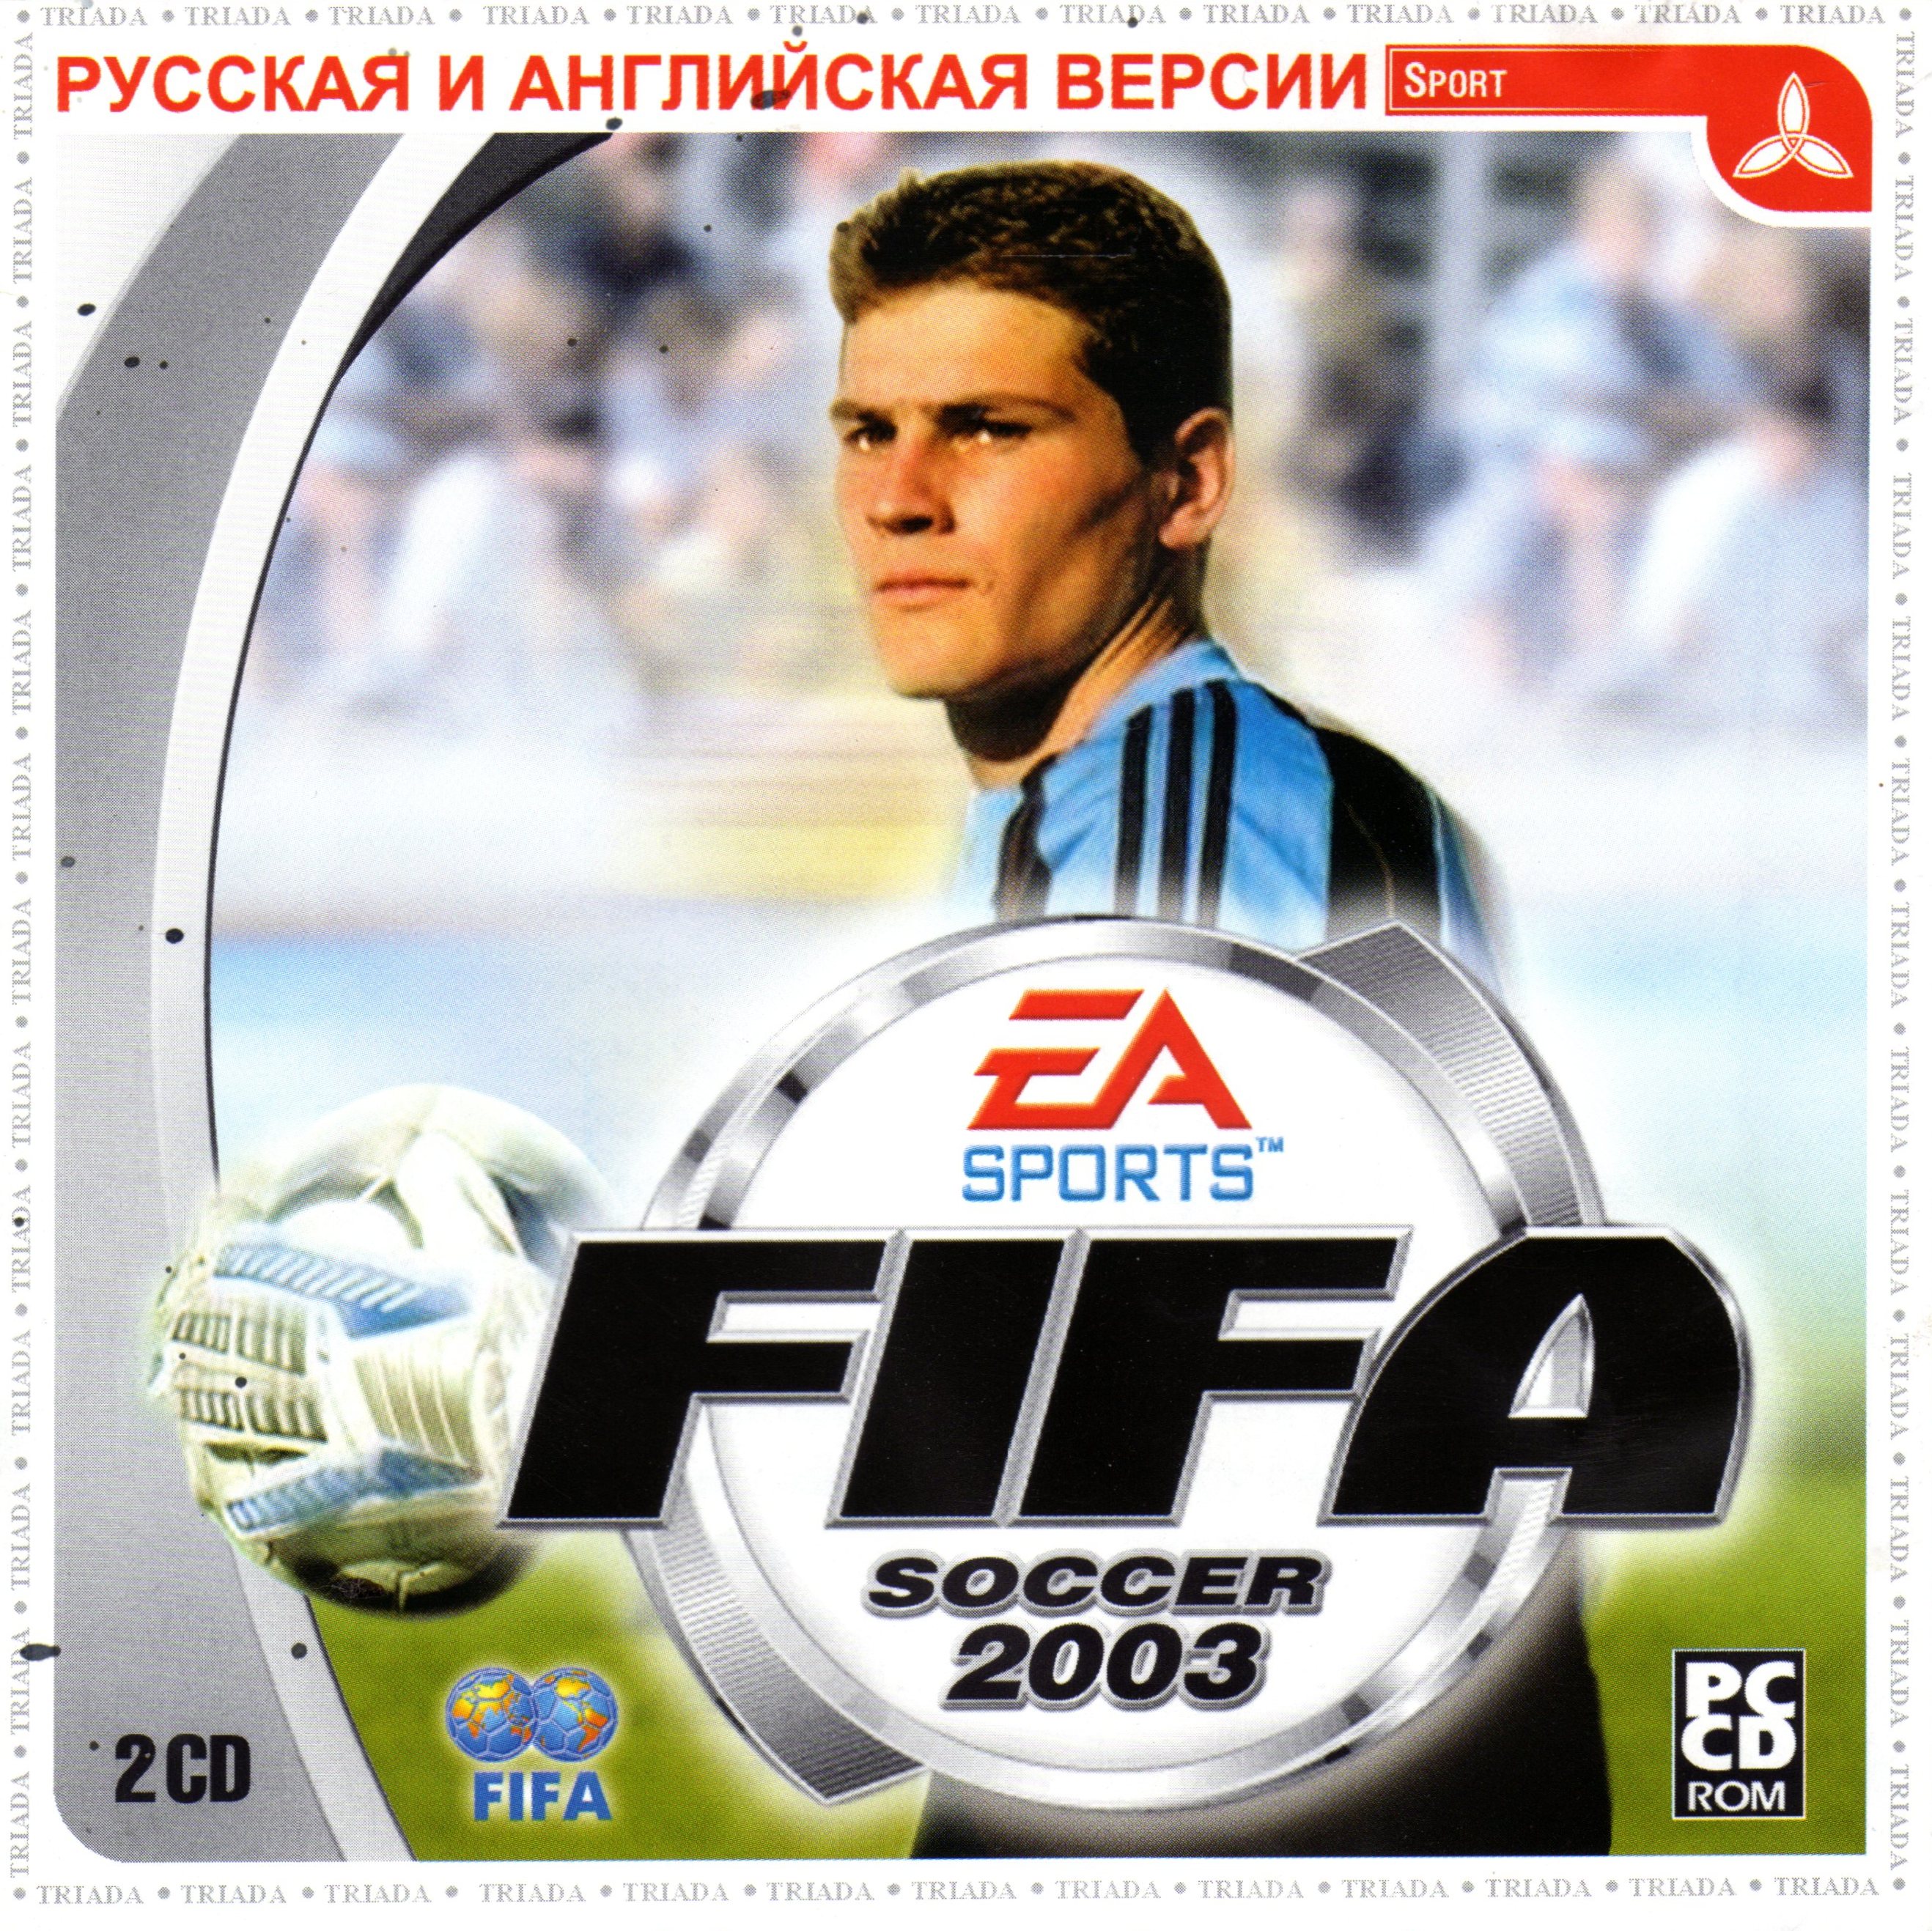 Диски fifa. FIFA 2003 диск. FIFA Soccer 2003. FIFA 2003 обложка. PC FIFA 2003 русская версия диск.